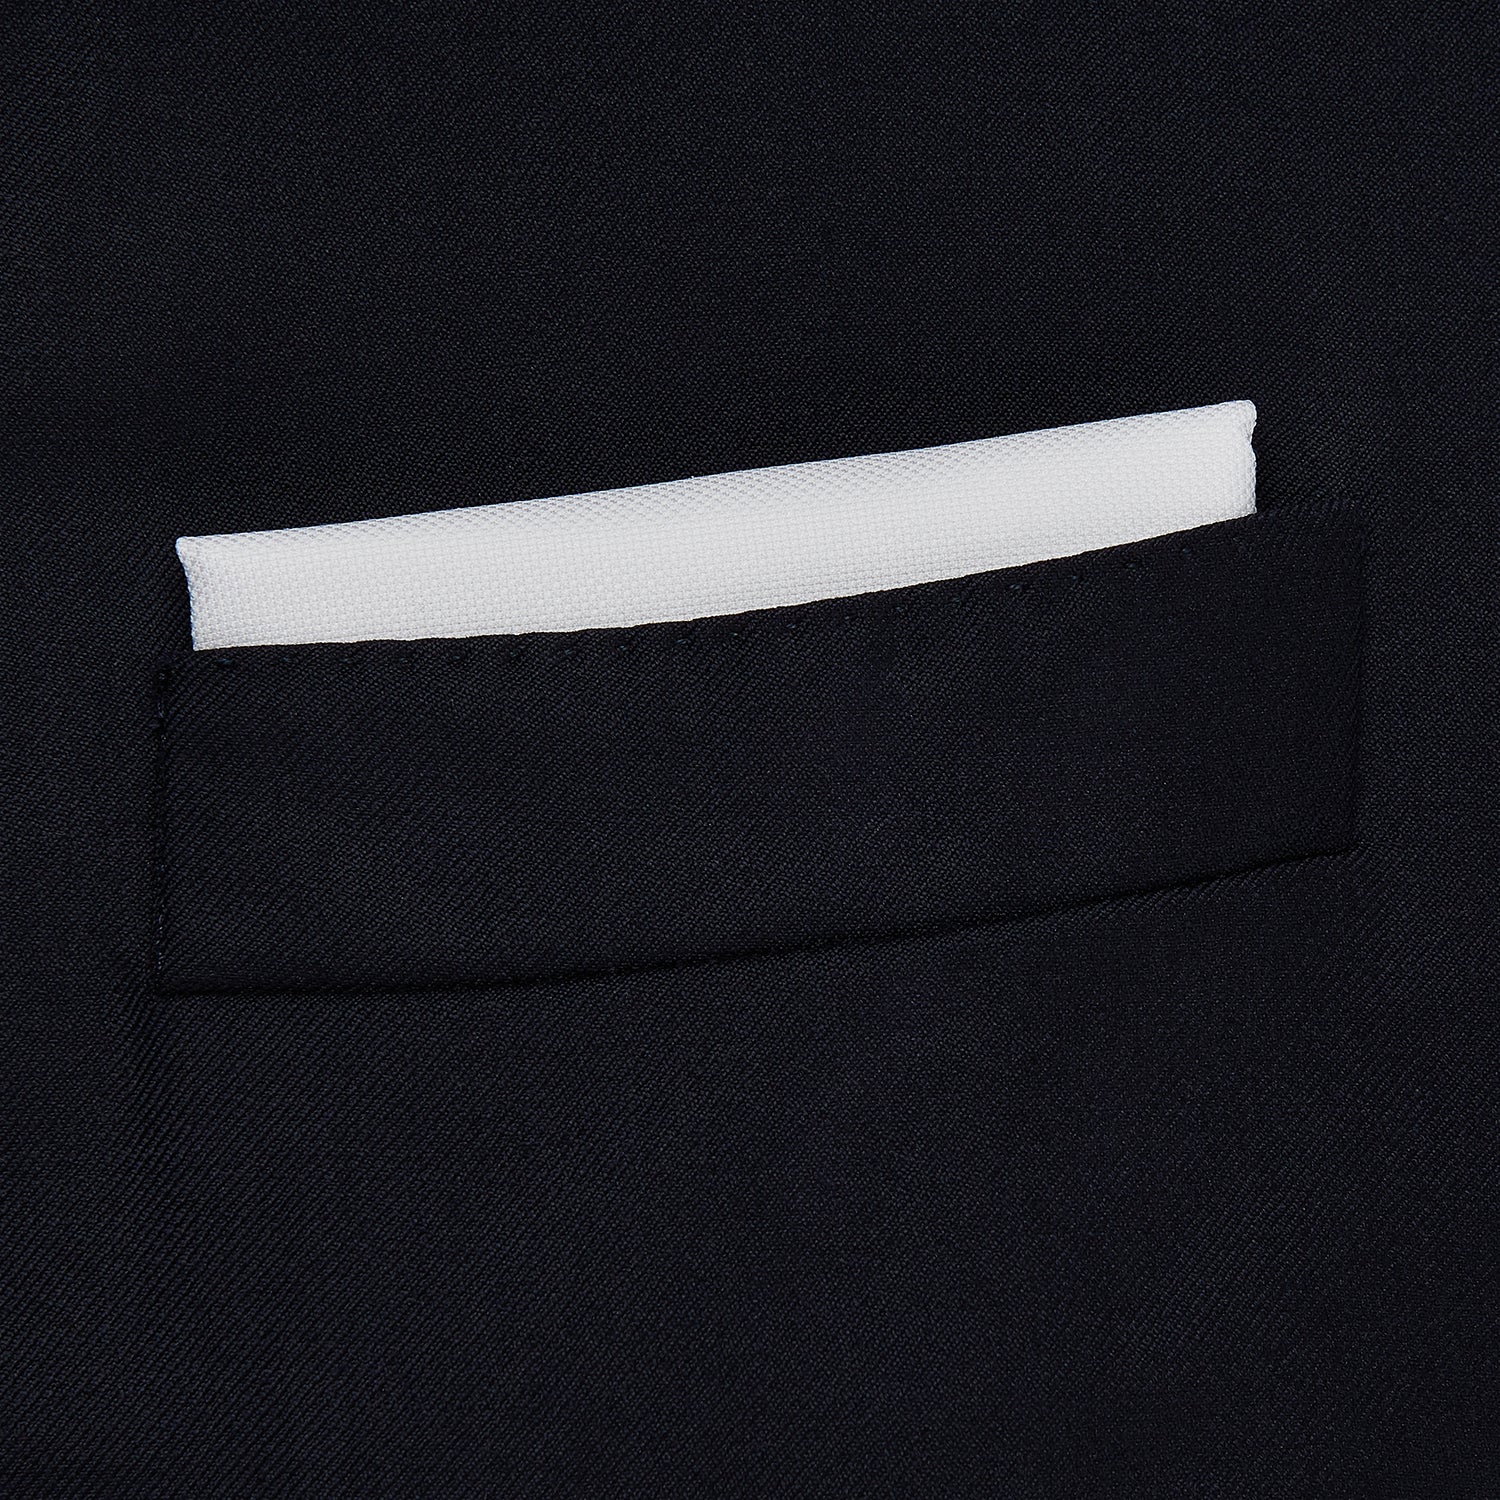 Single Plain White Cotton Handkerchief